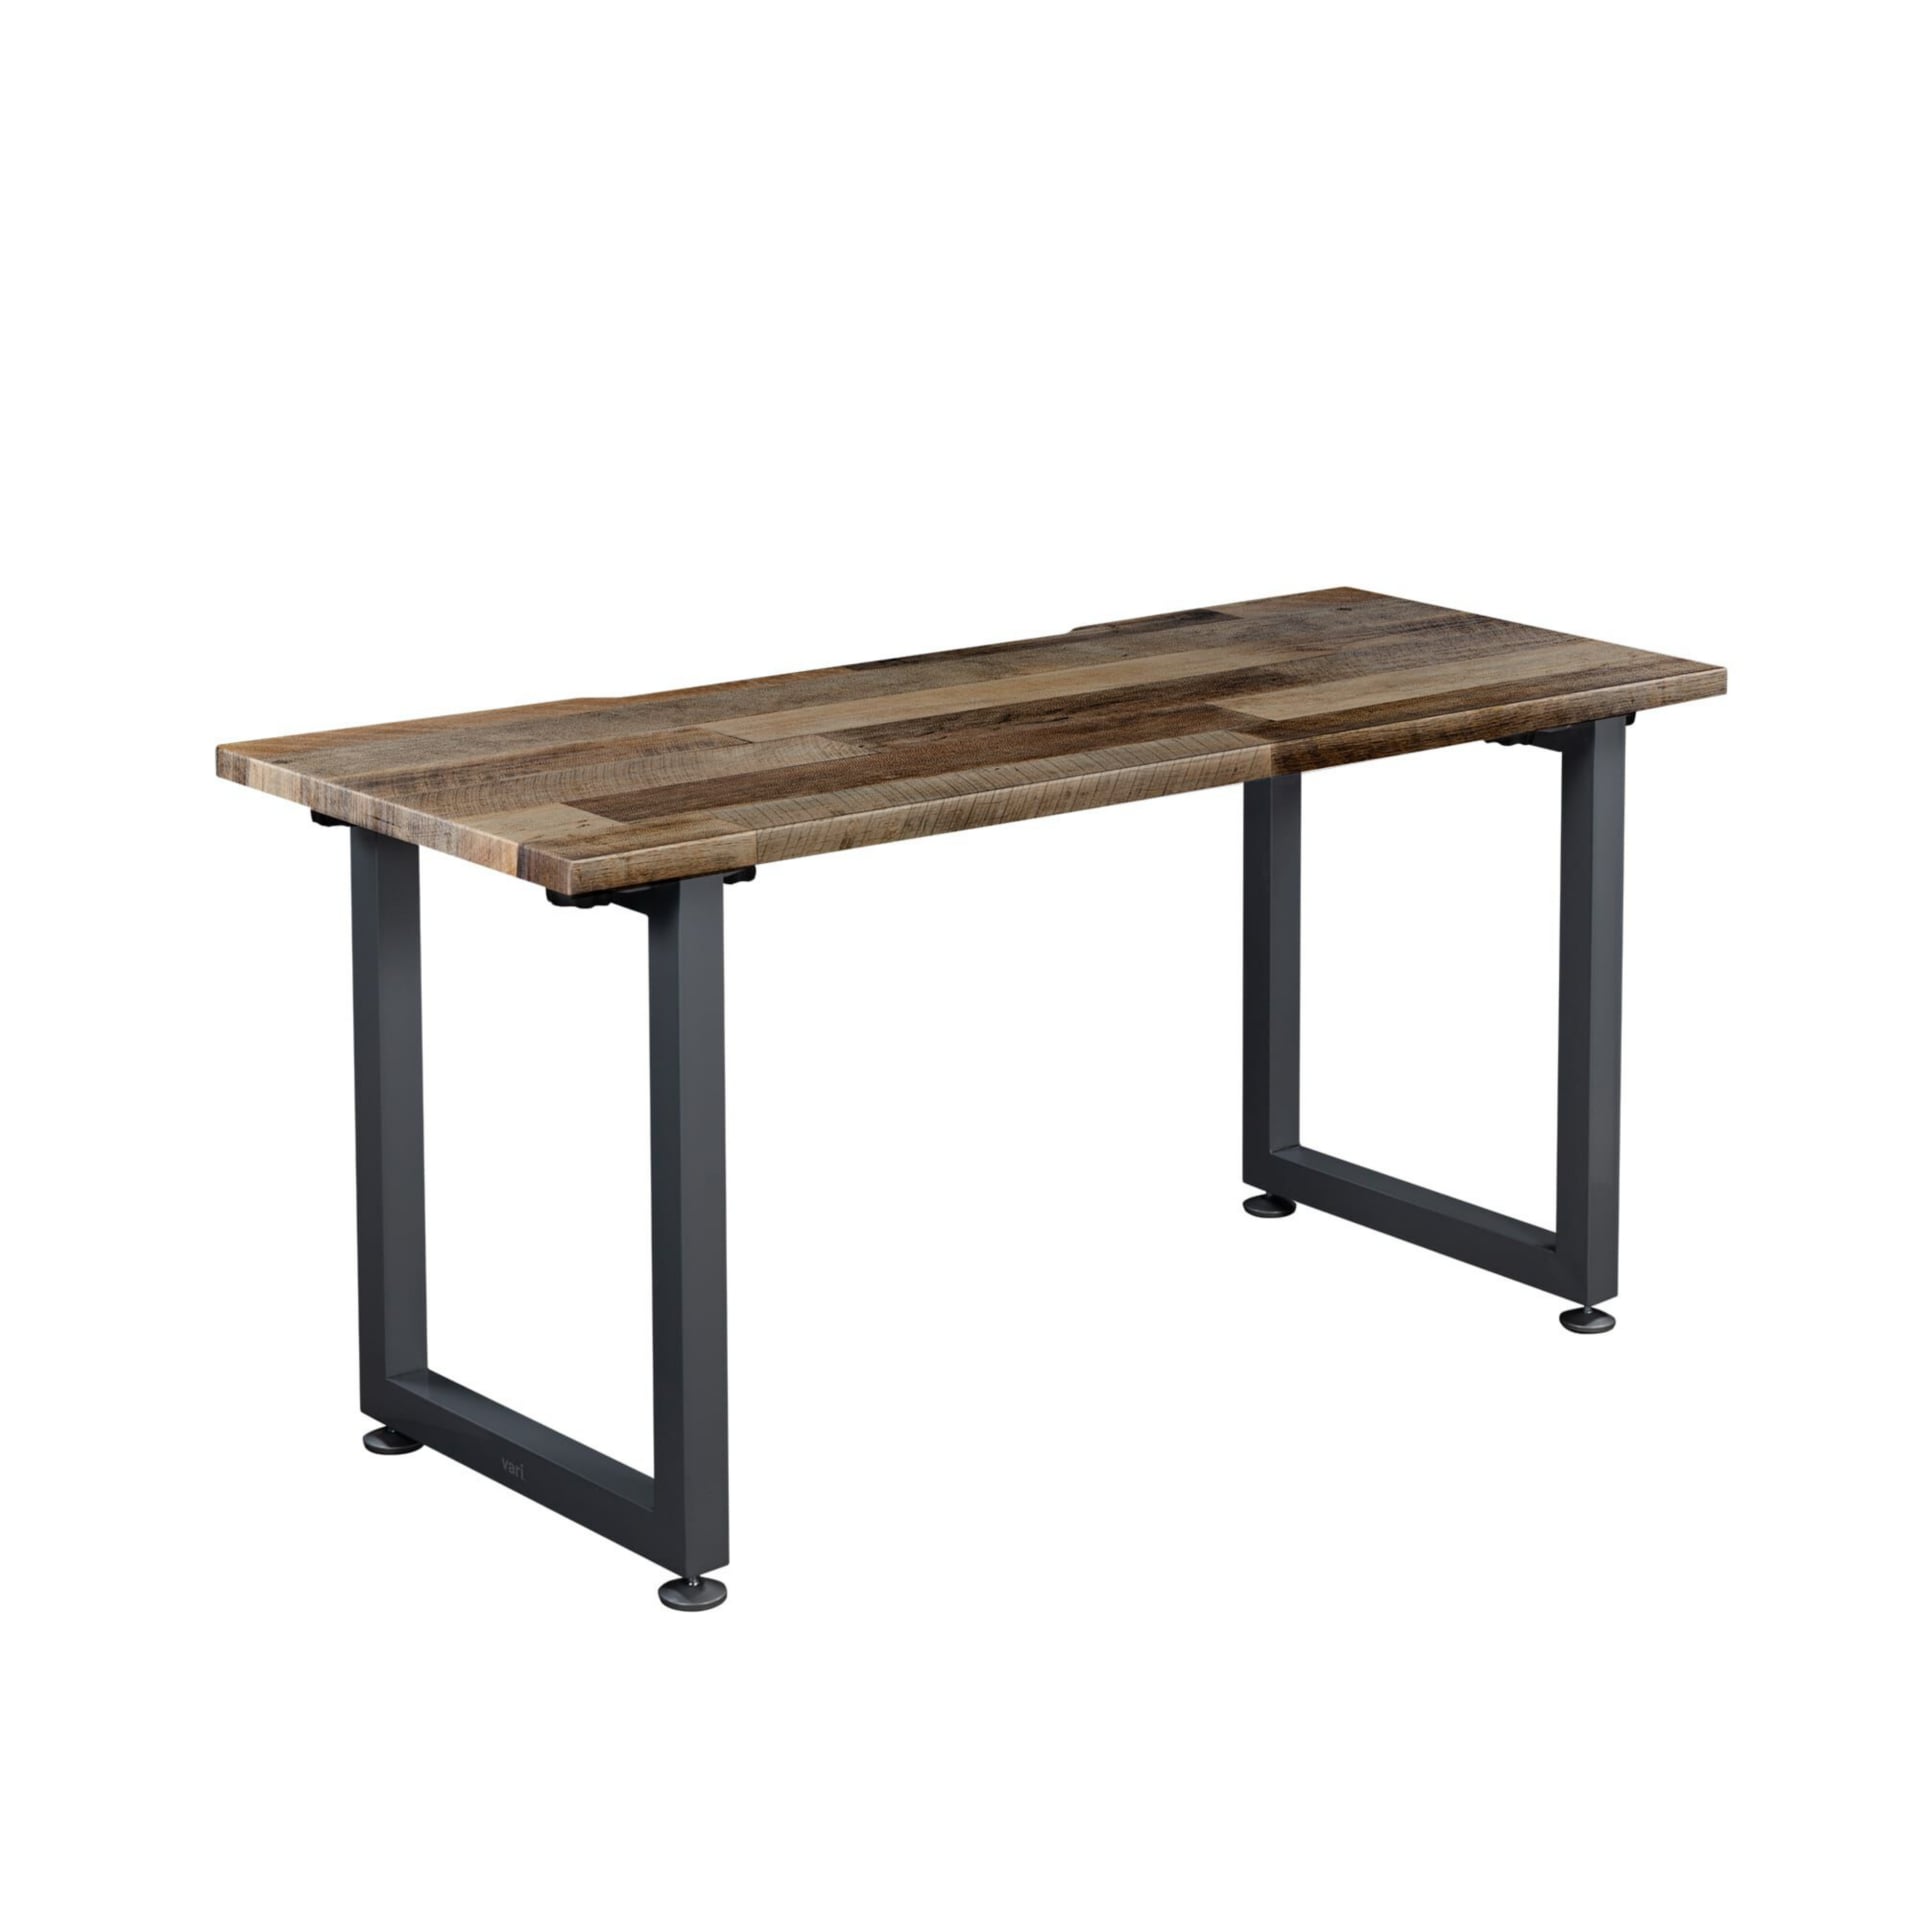 VariDESK QuickPro - table - rectangular - reclaimed wood